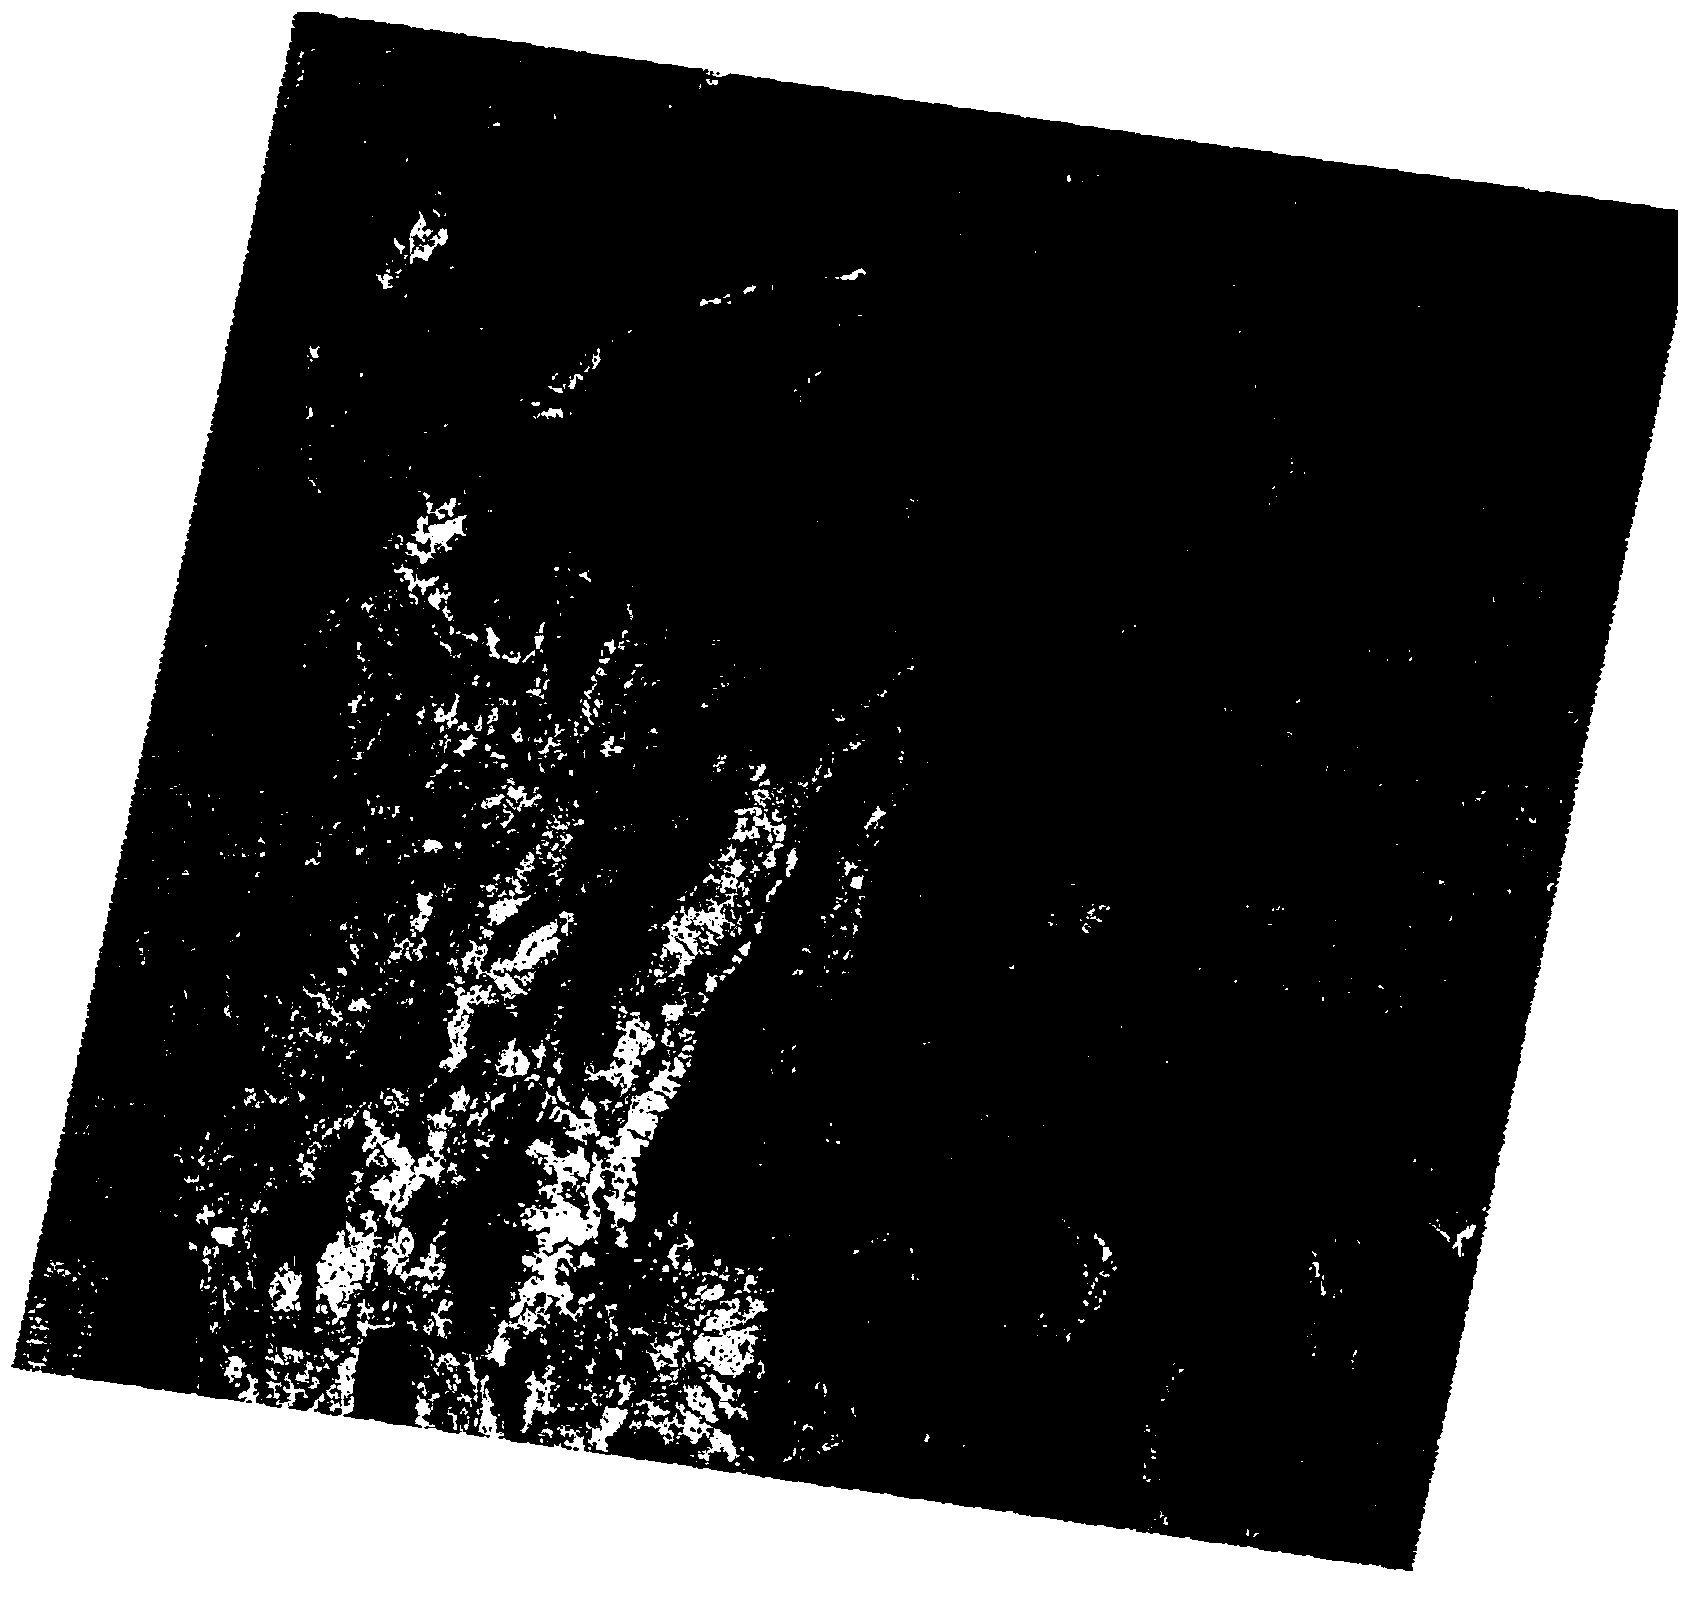 Decision tree model based multispectral remote sensing image river information extraction method